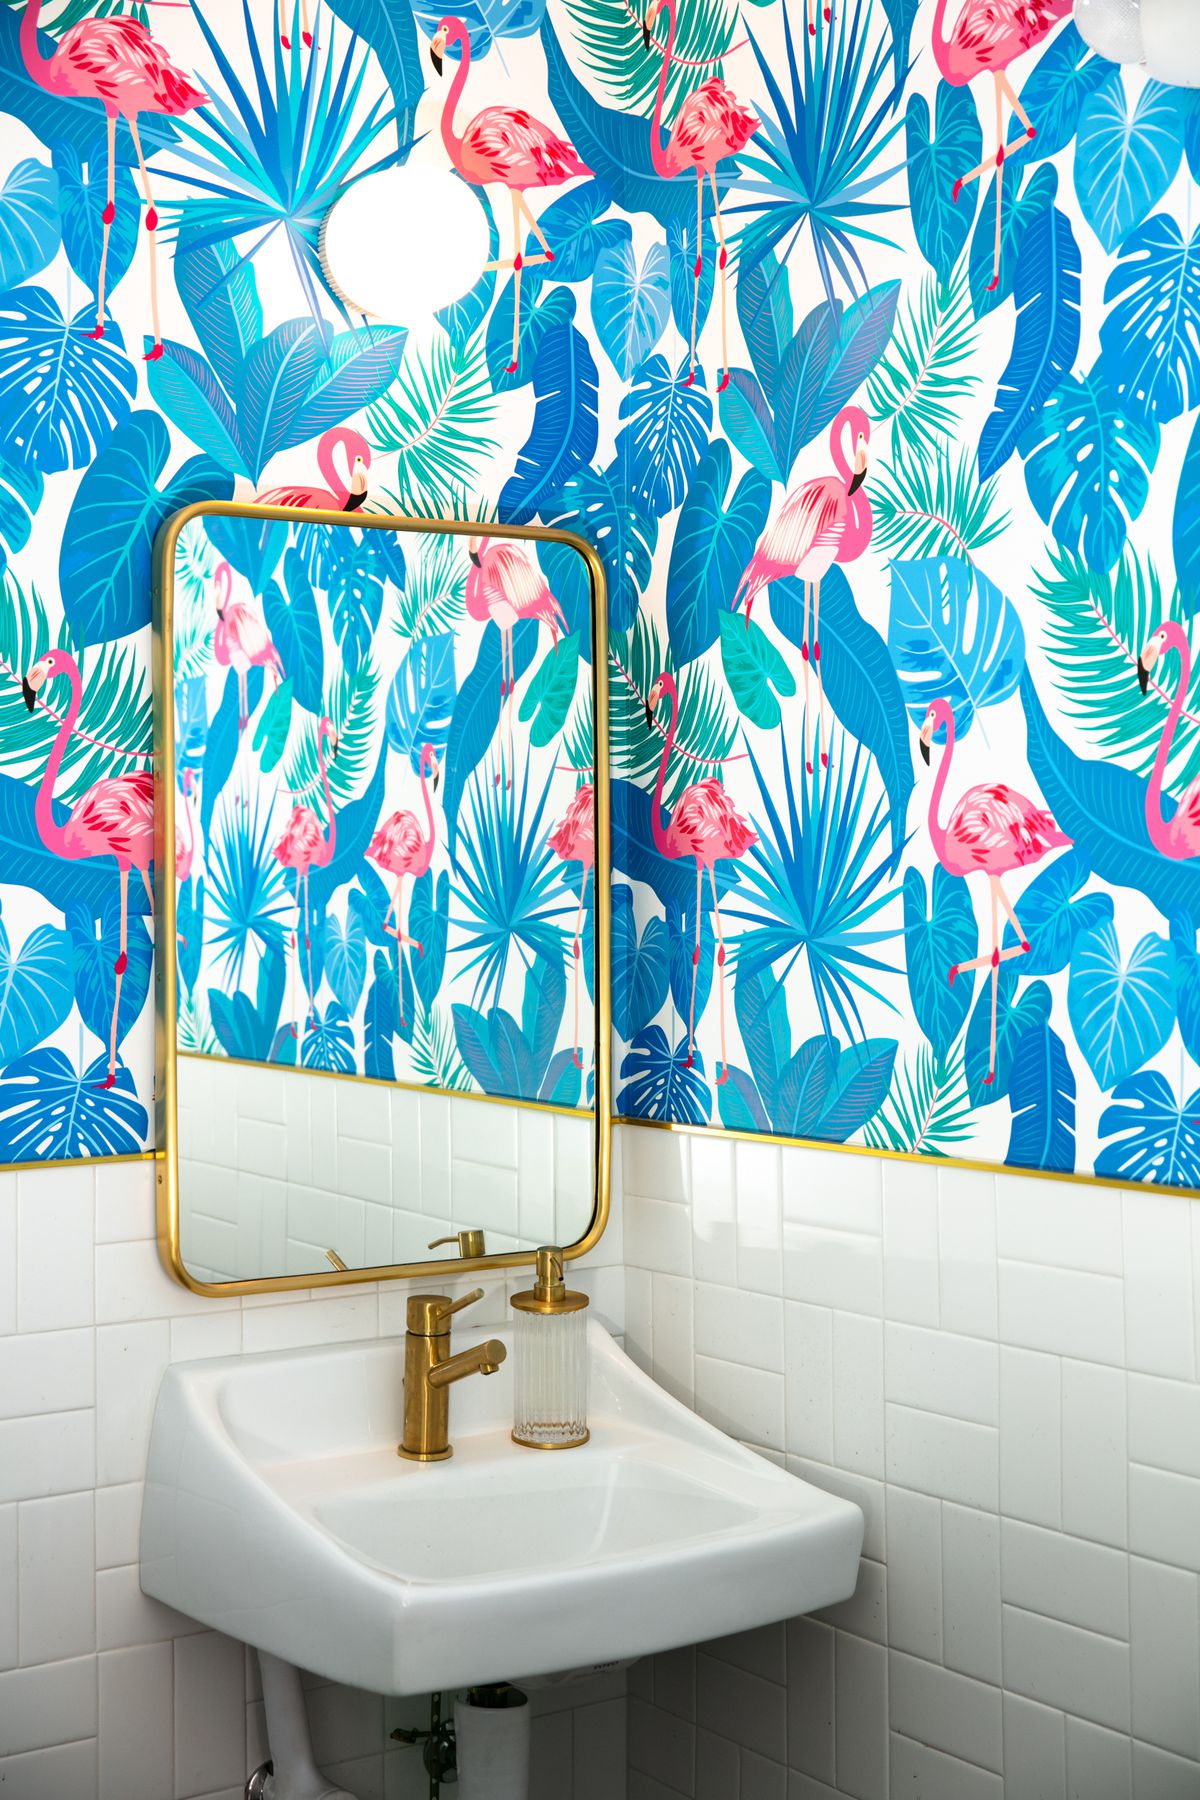 Leaf print blue wallpaper with flamingos in the bathroom at AL’s Deli